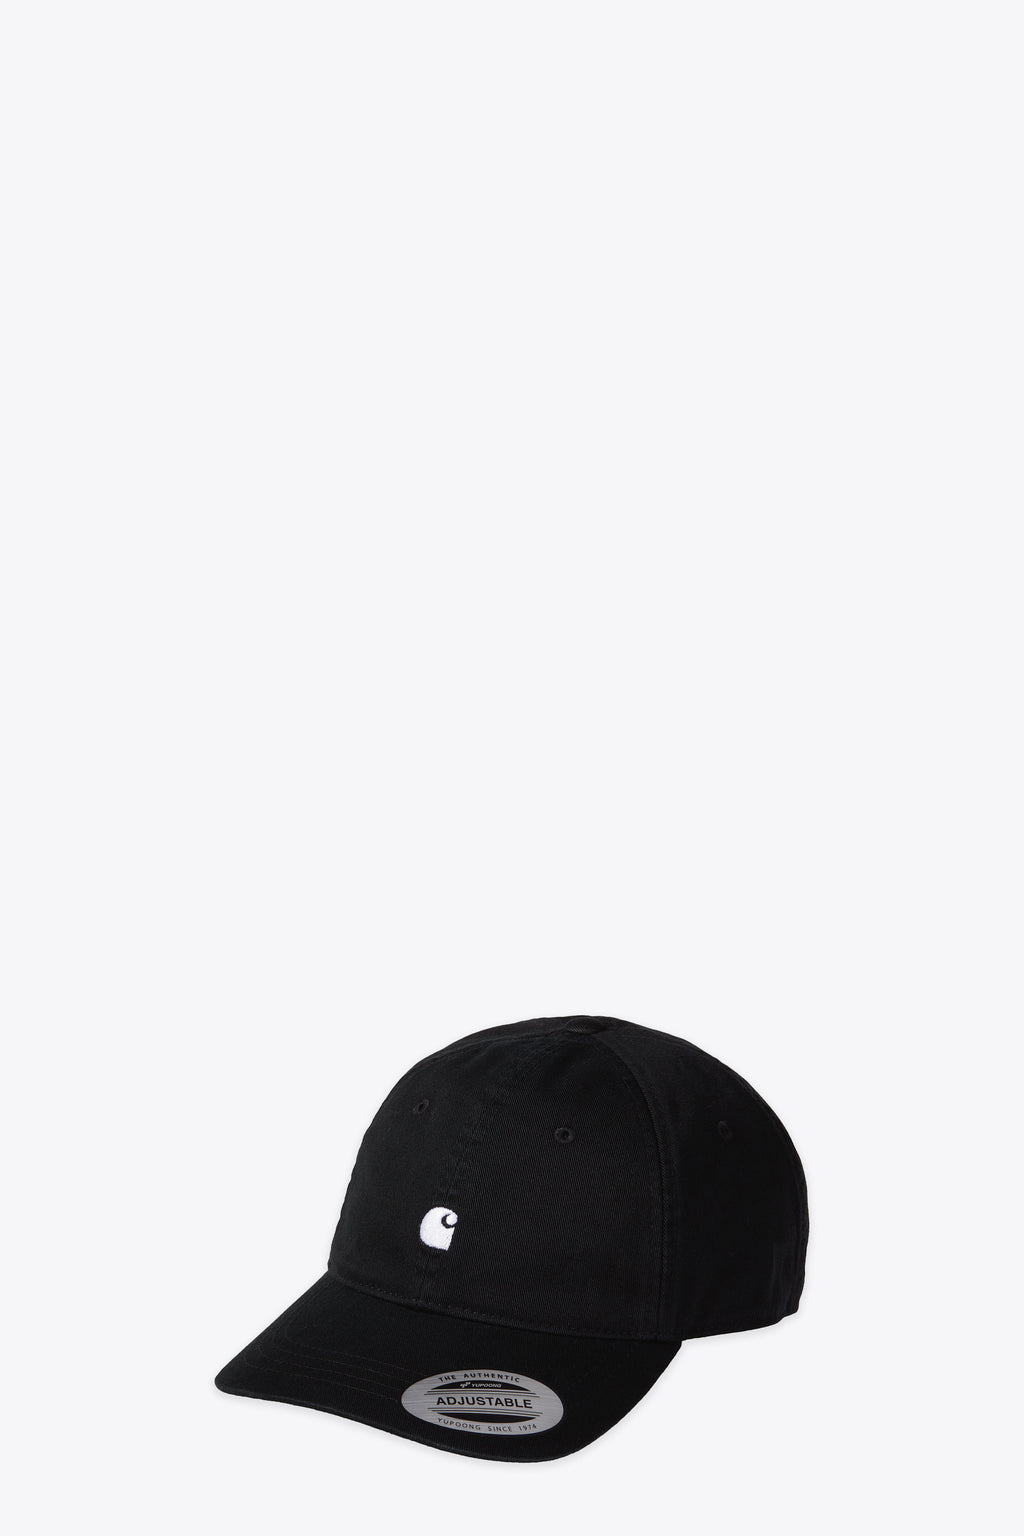 alt-image__Black-twill-baseball-cap-with-logo-embroidery---Madison-Logo-Cap